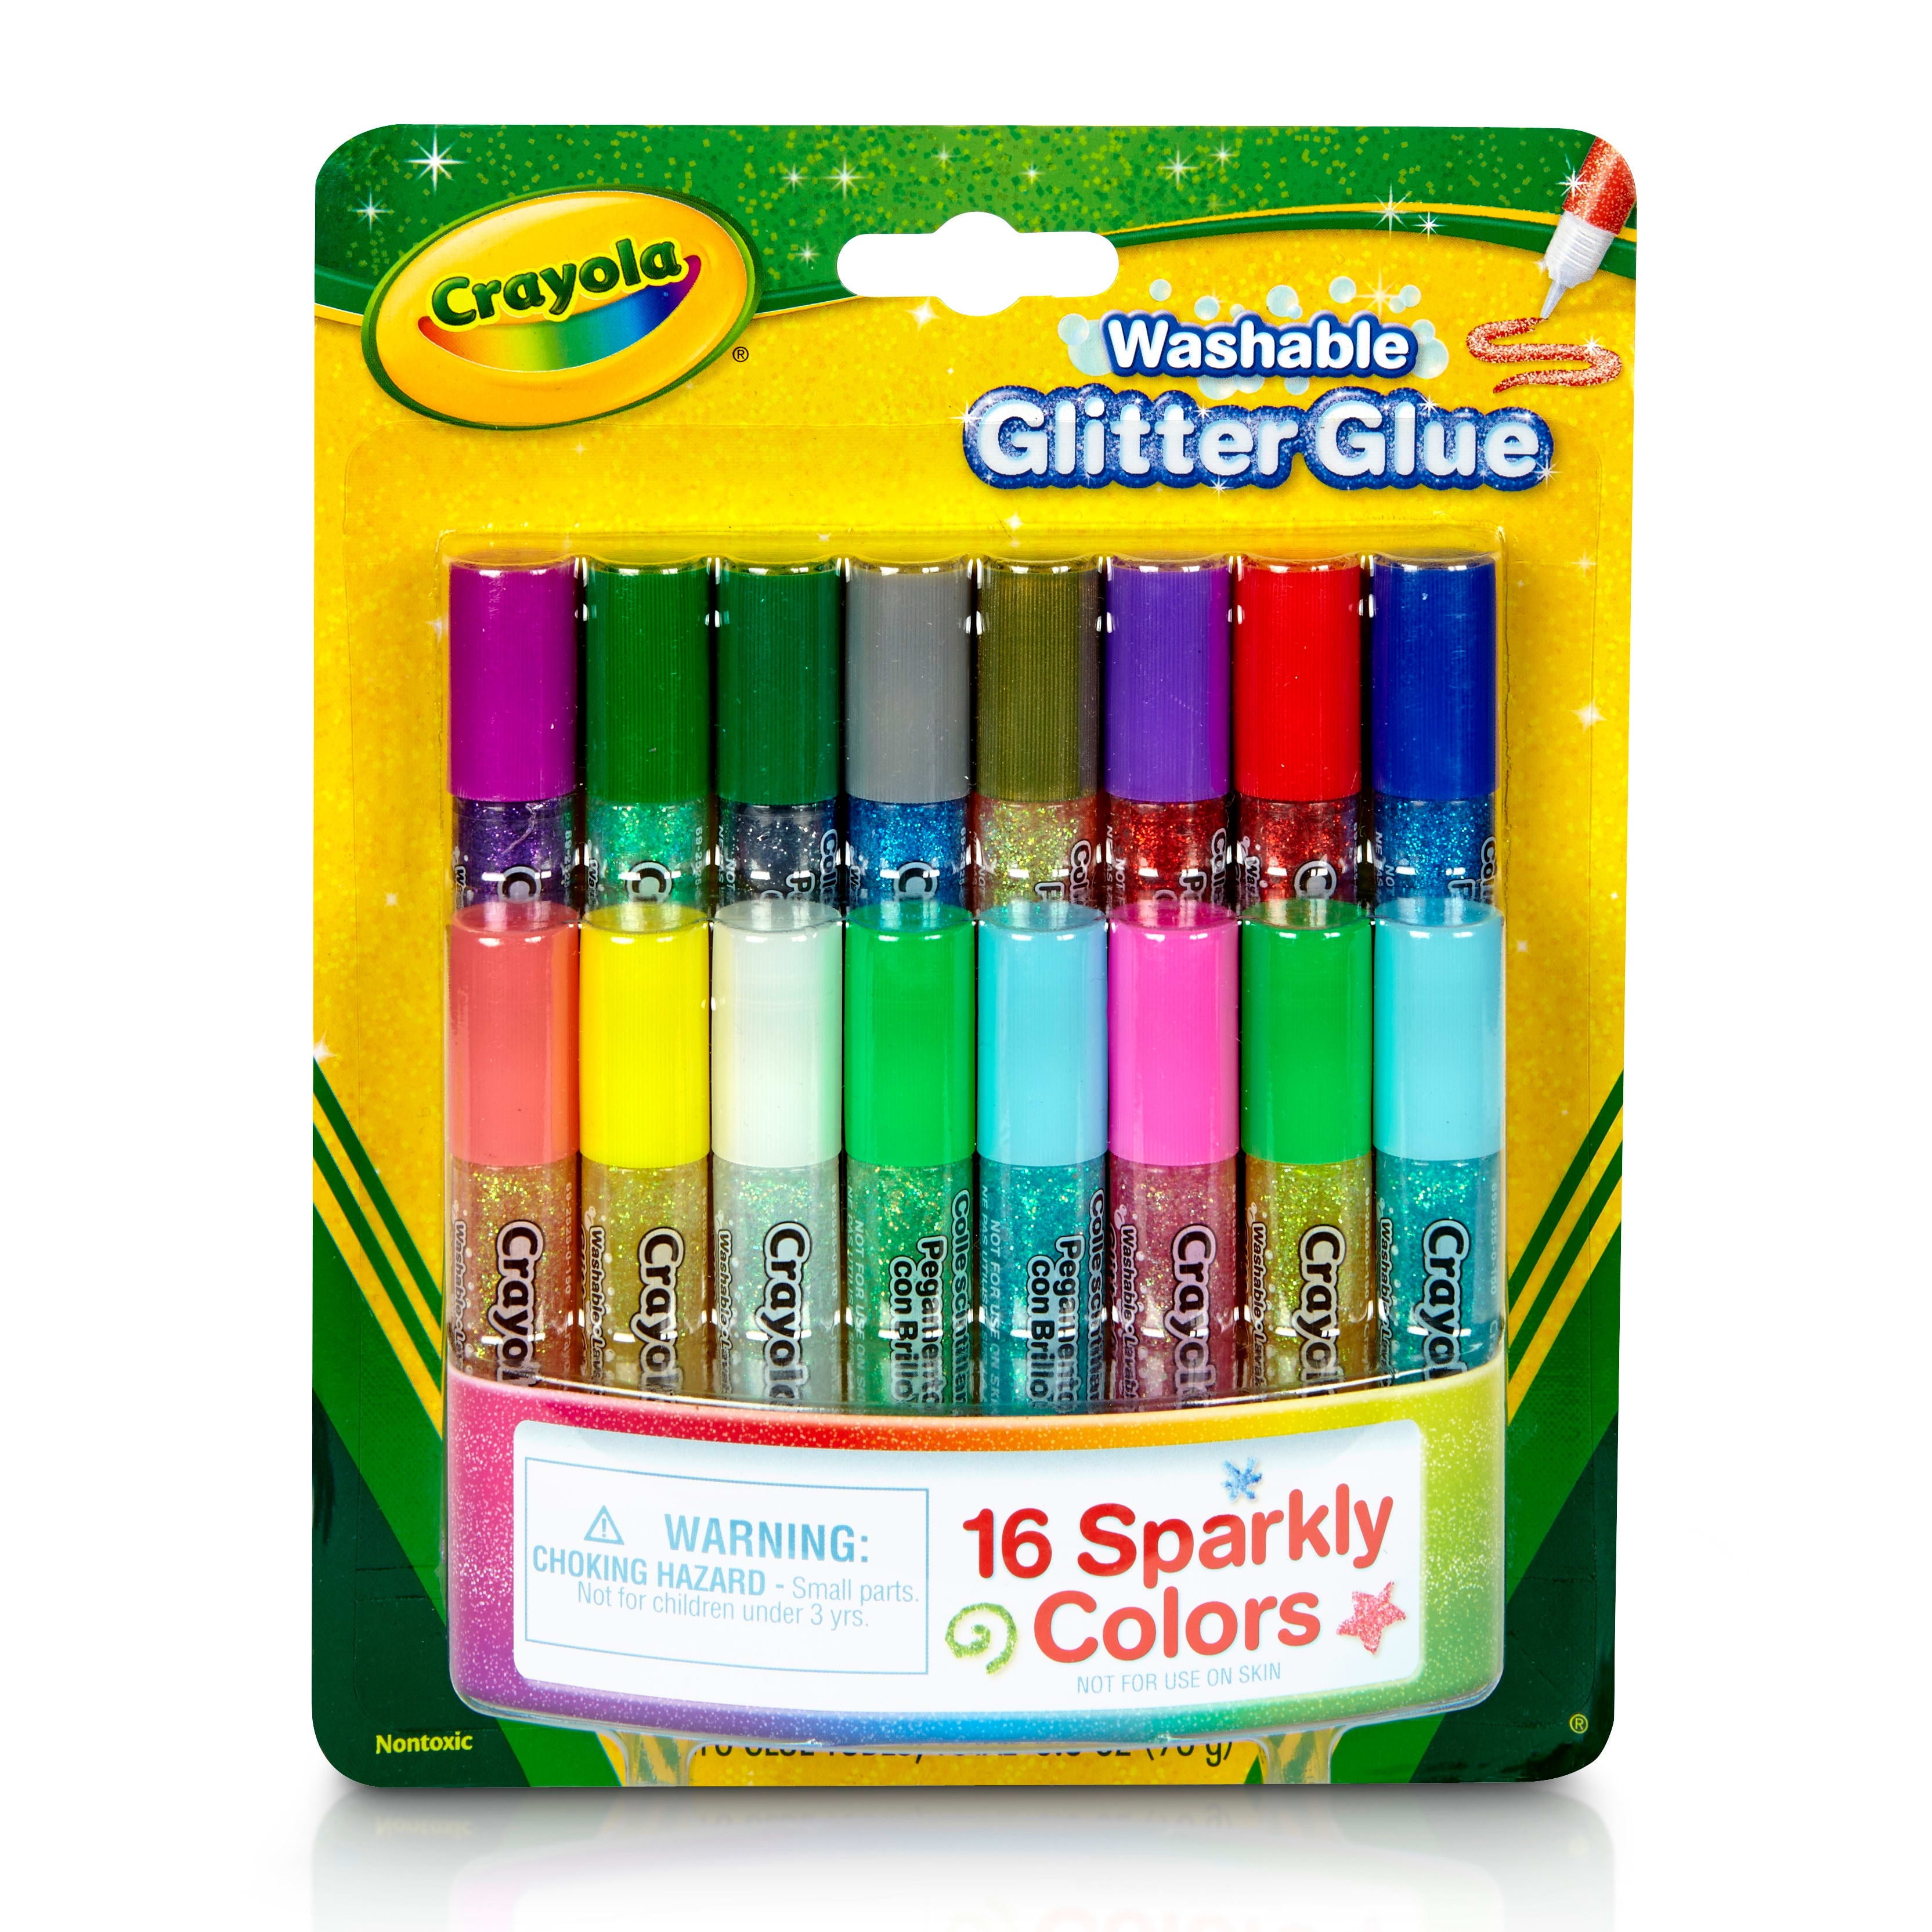 Glitter and Glitter Glue  littlecraftybugs - Craft Glitter